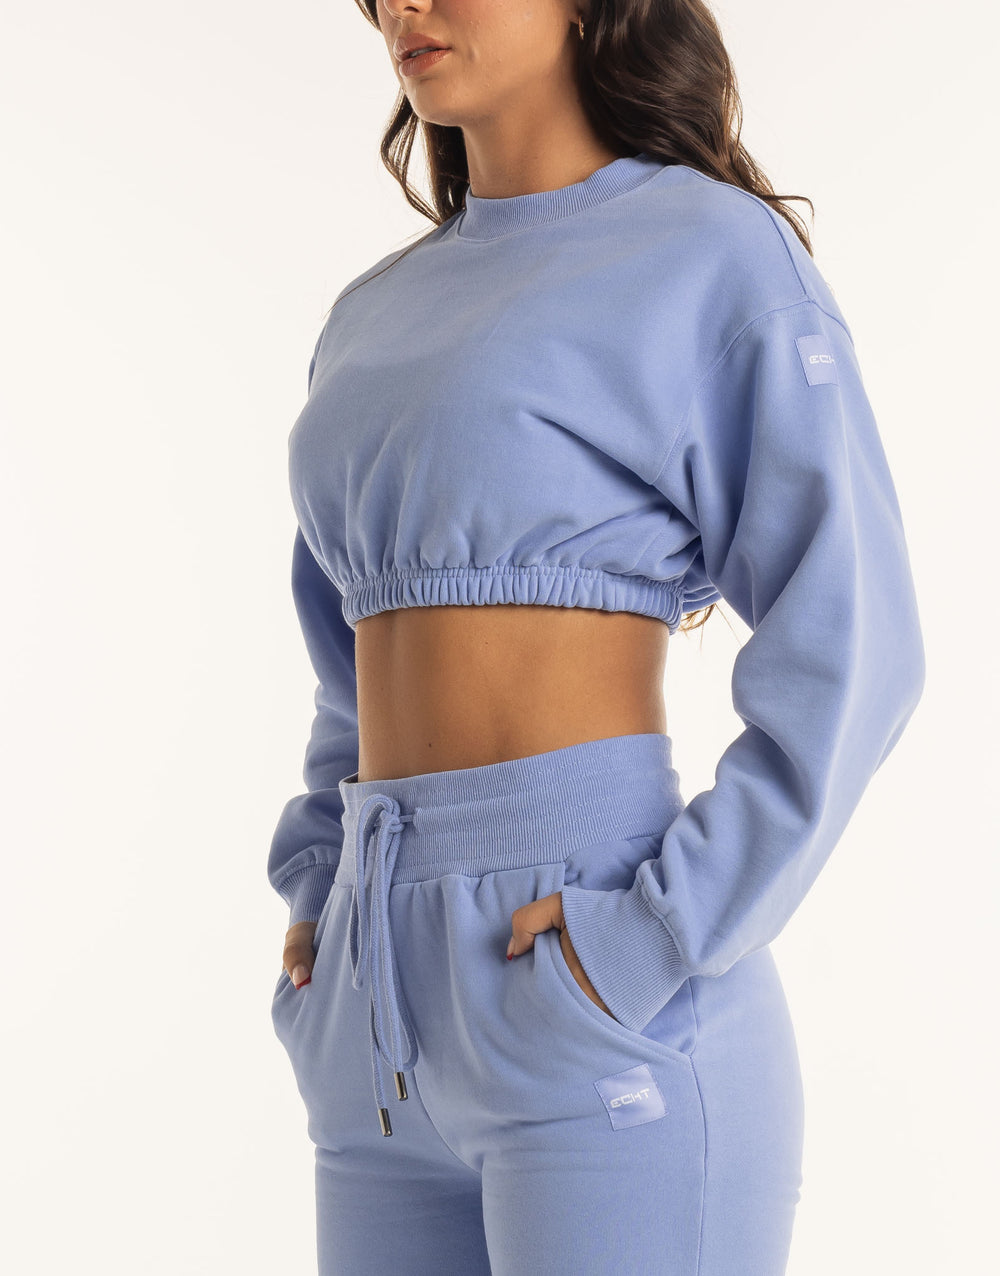 Esteem Cropped Sweater - Hydrangea Blue